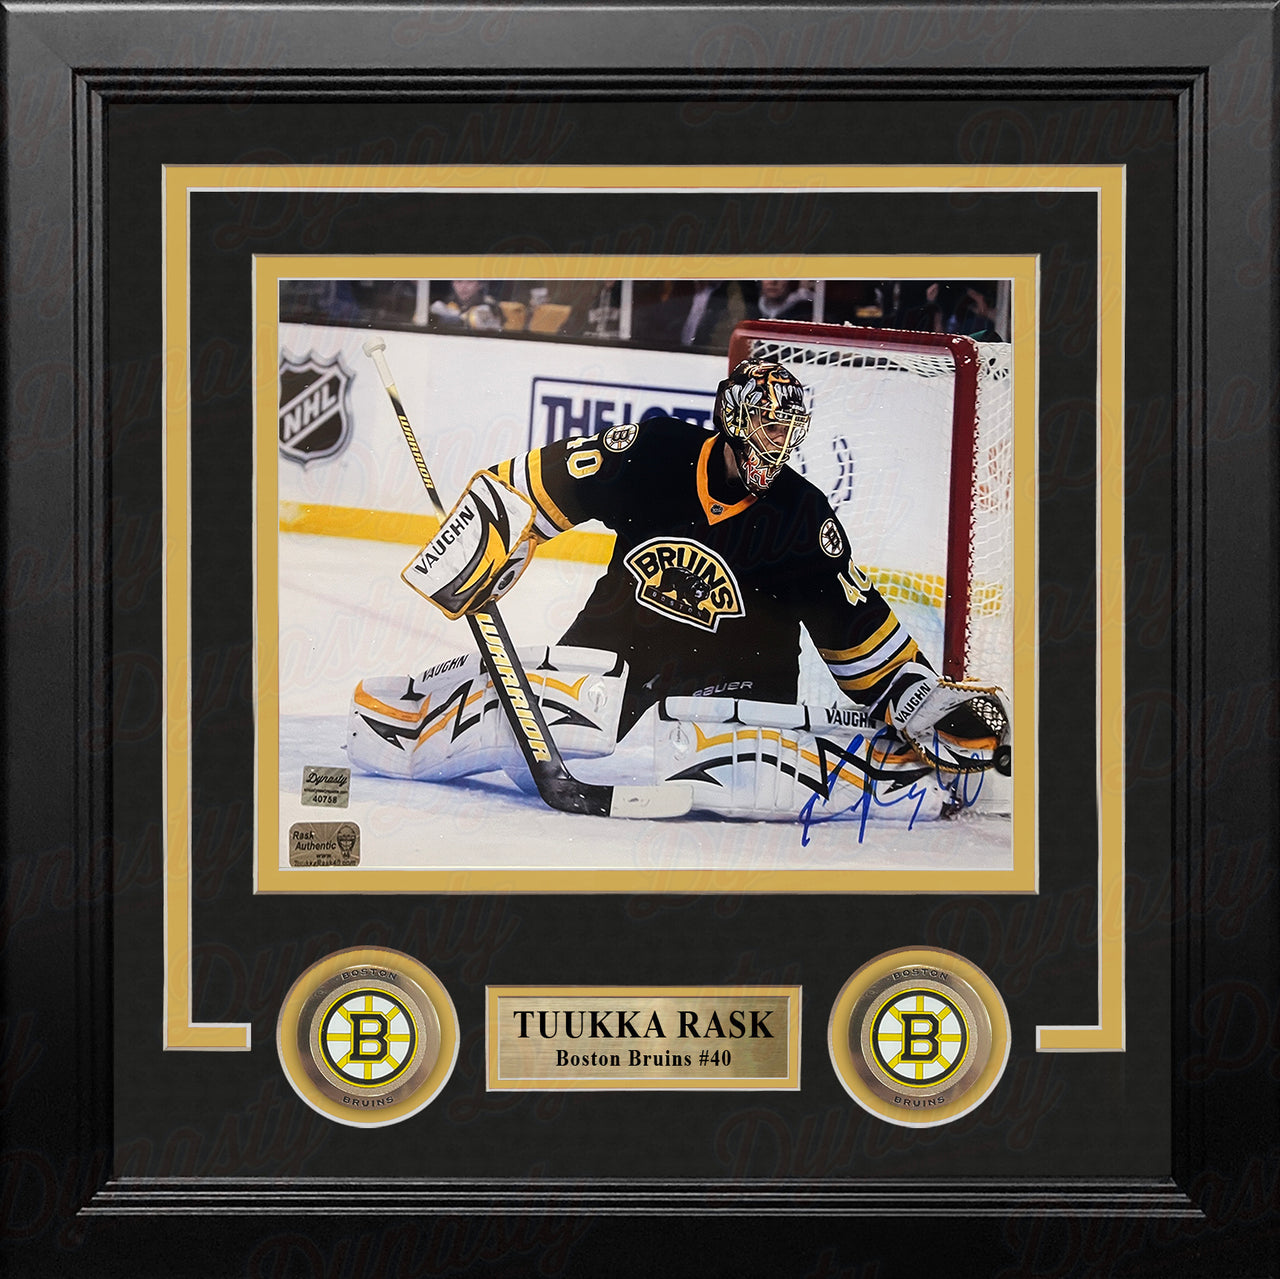 Tuukka Rask Glove Save Boston Bruins Autographed 8" x 10" Framed Hockey Photo